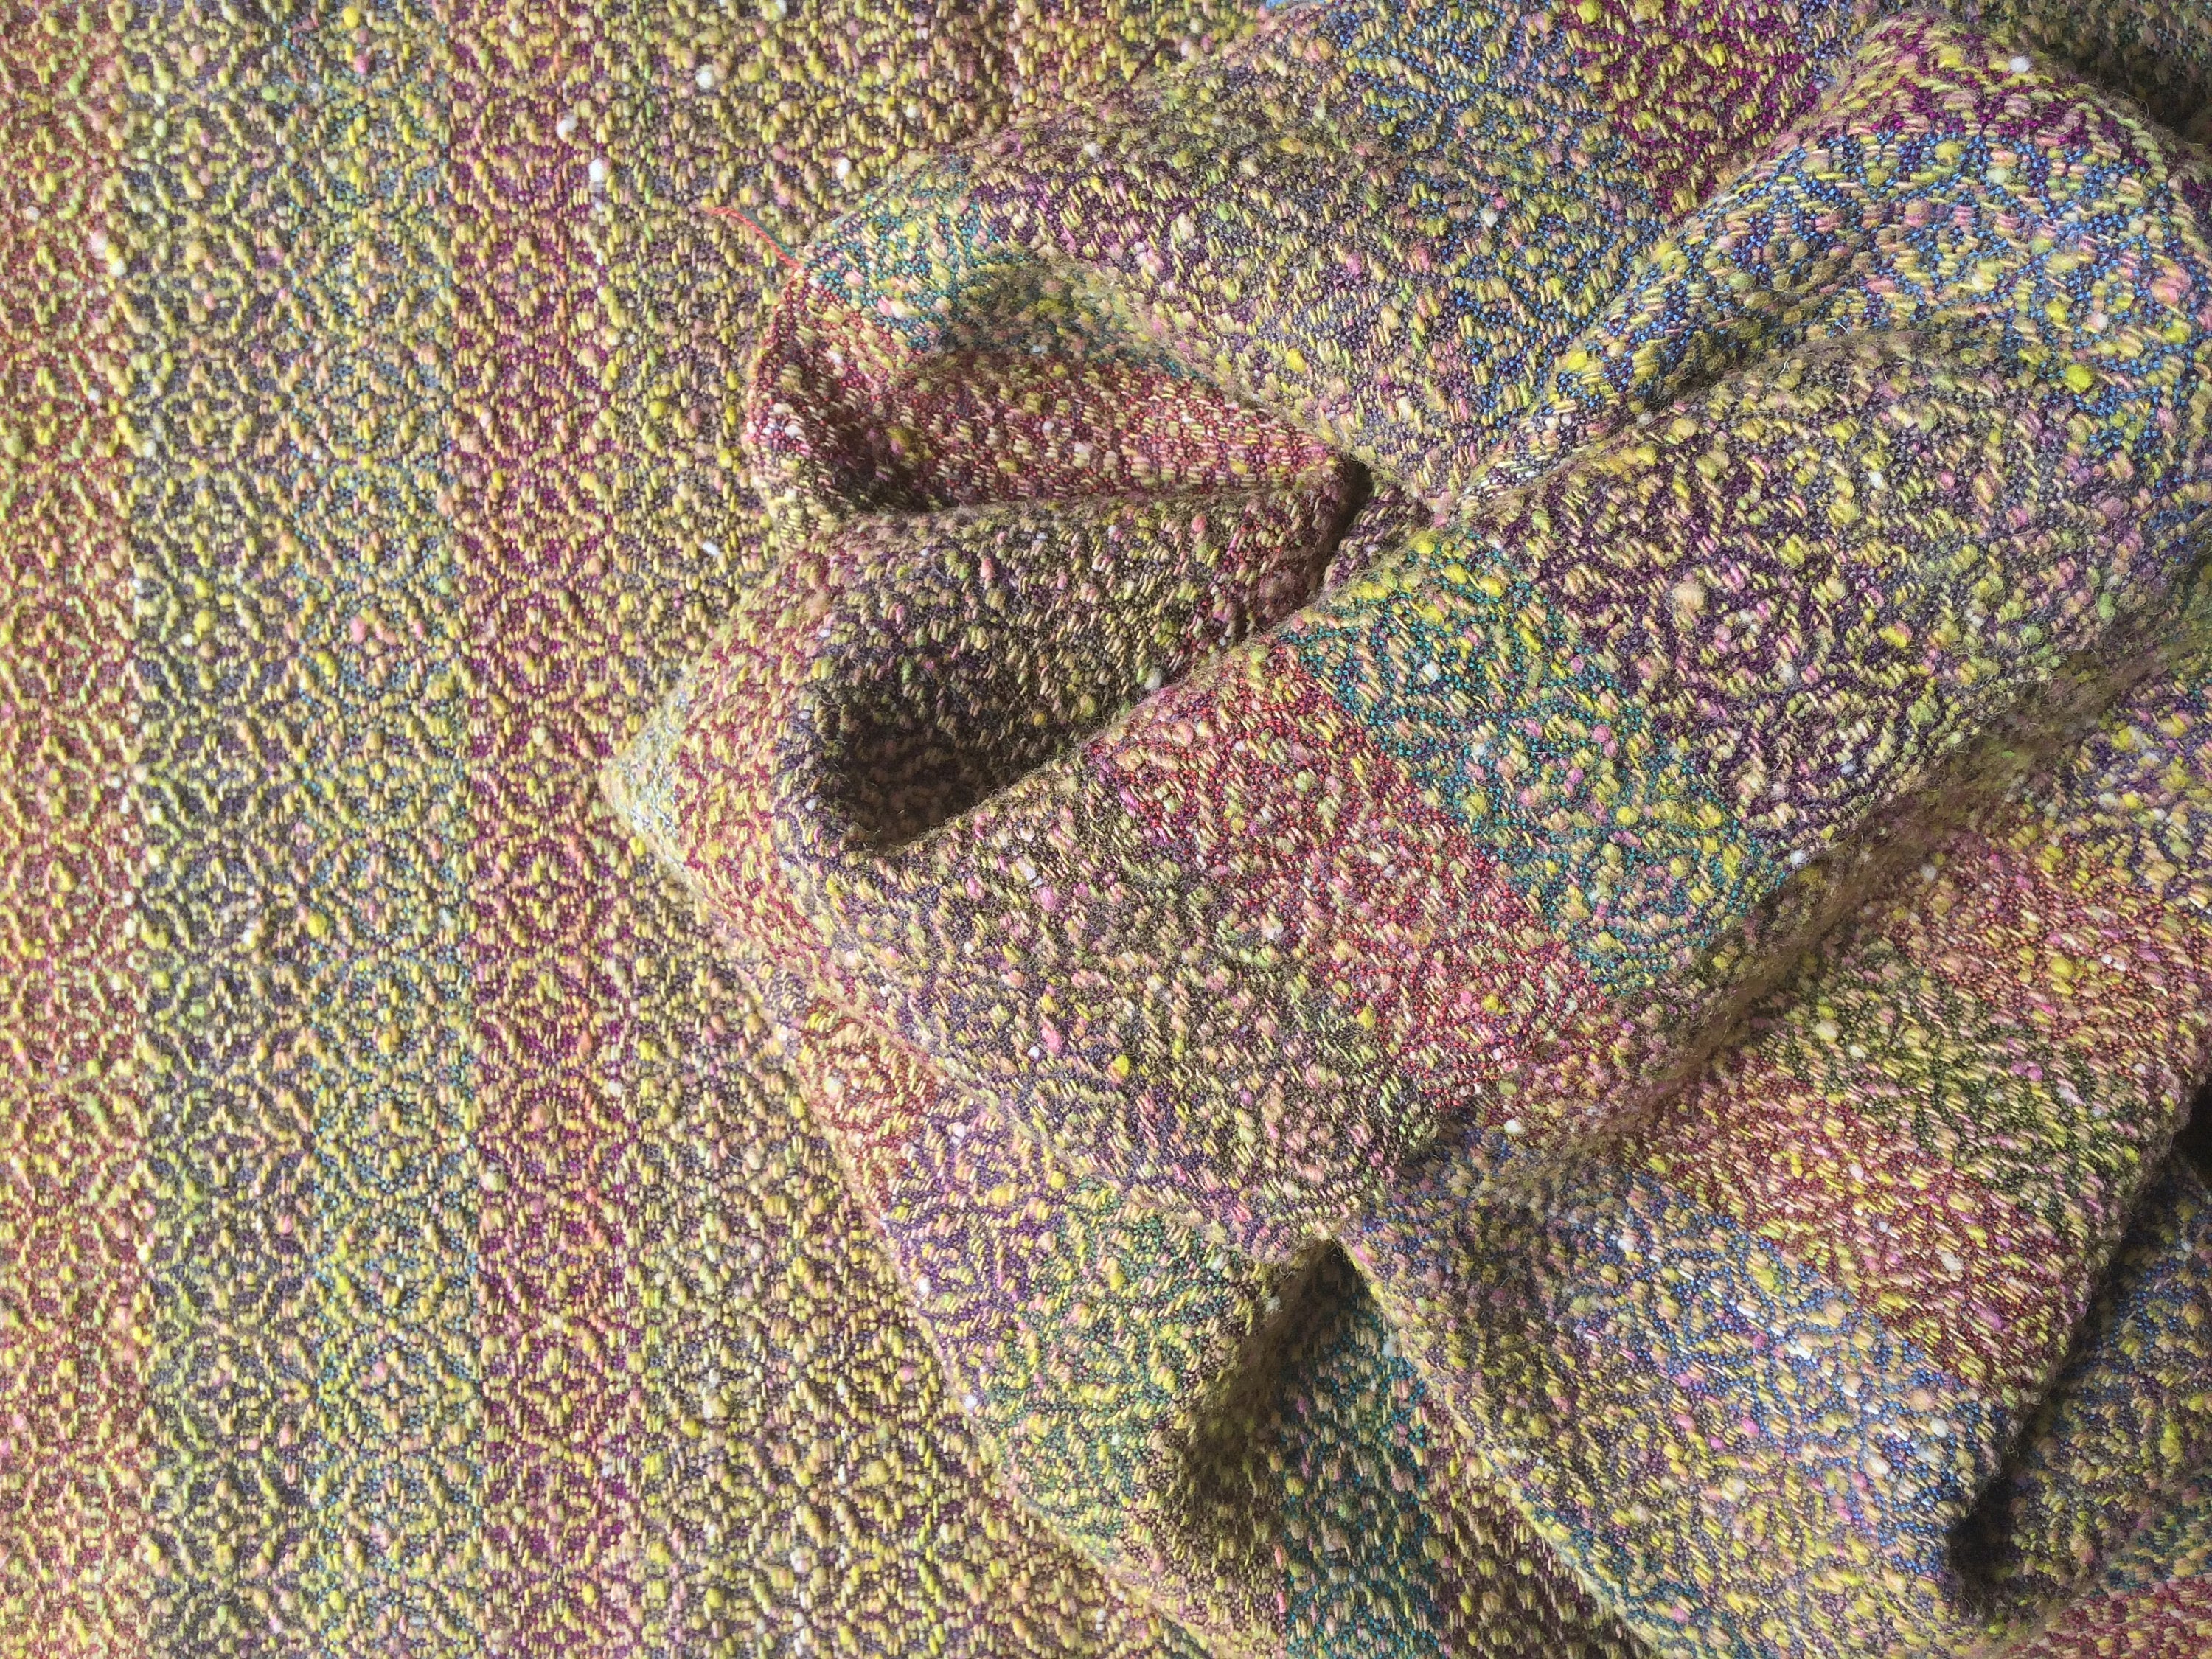 Handwoven Fabric, 100% Wool